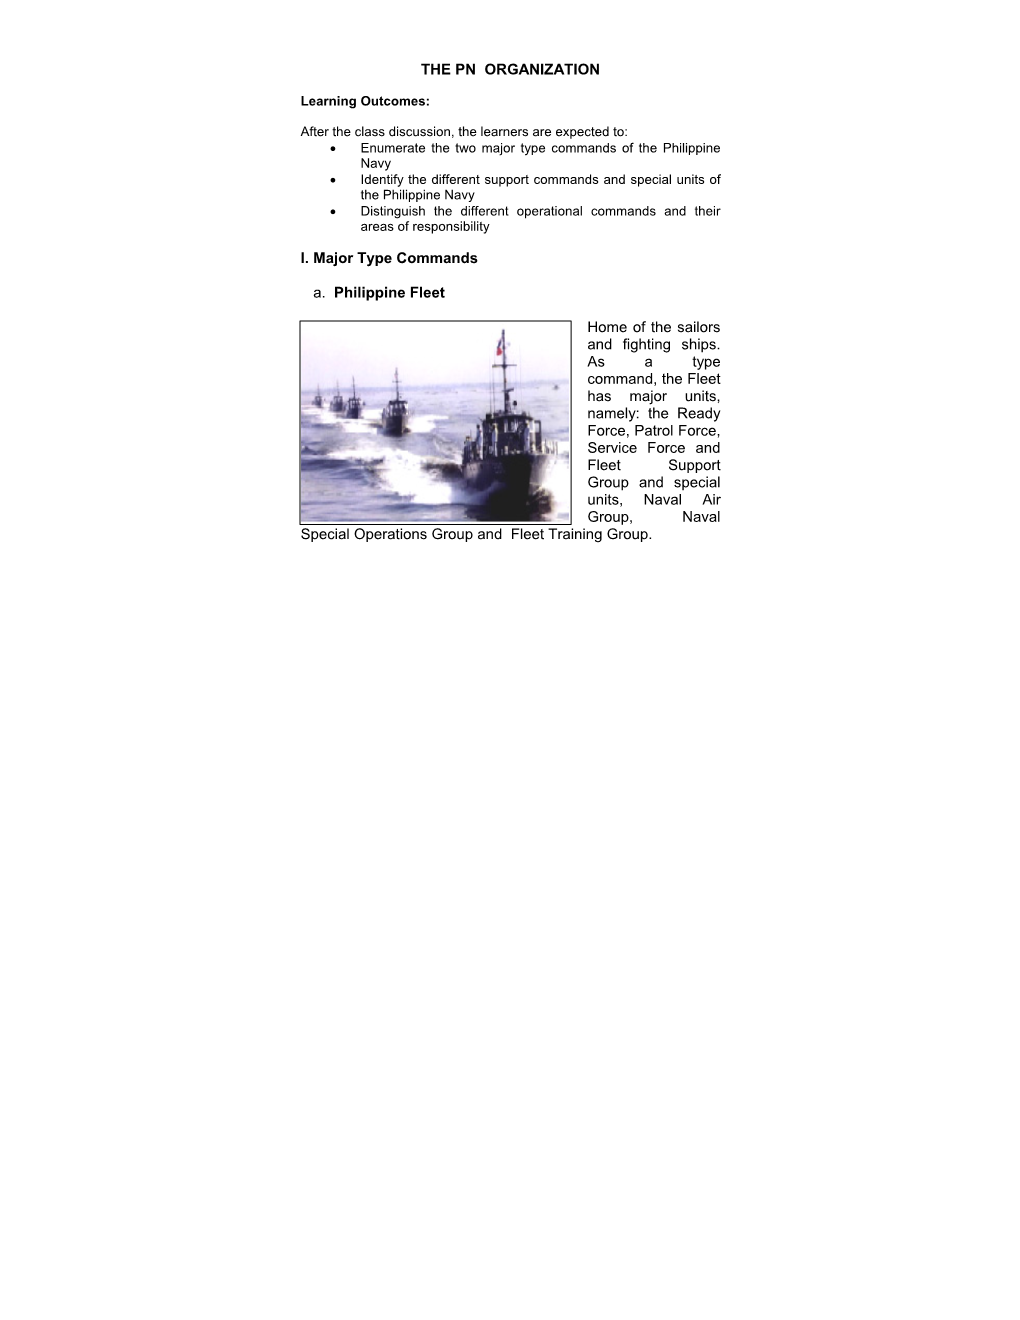 THE PN ORGANIZATION I. Major Type Commands A. Philippine Fleet